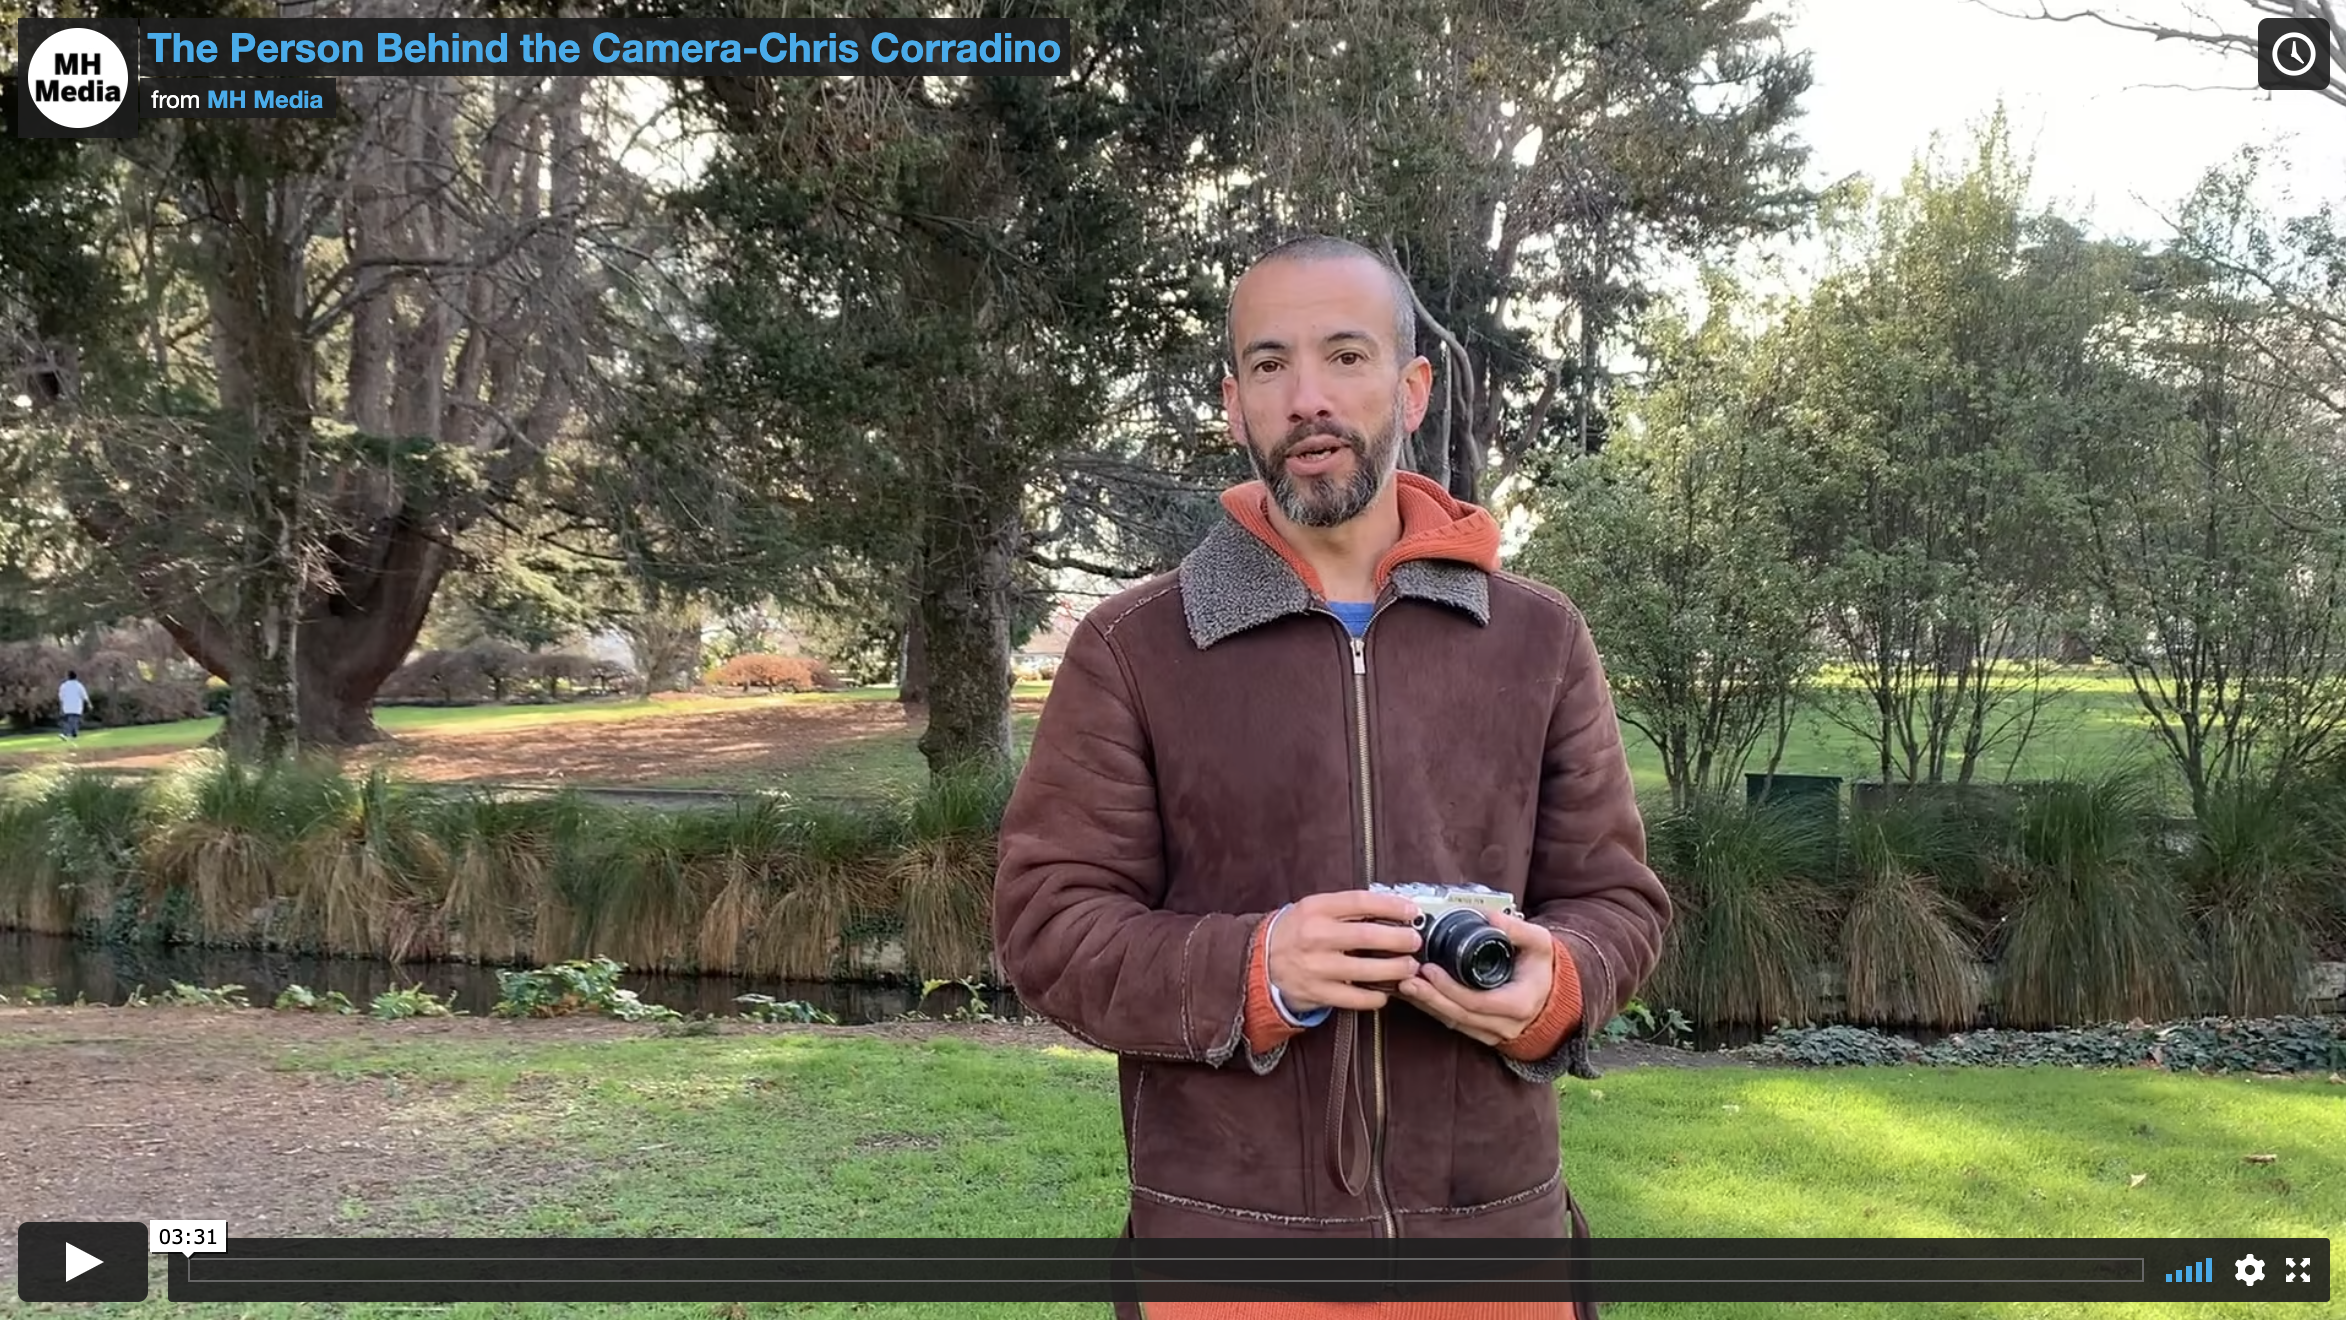 Premium/ Video | Meet the person behind the camera: Chris Corradino